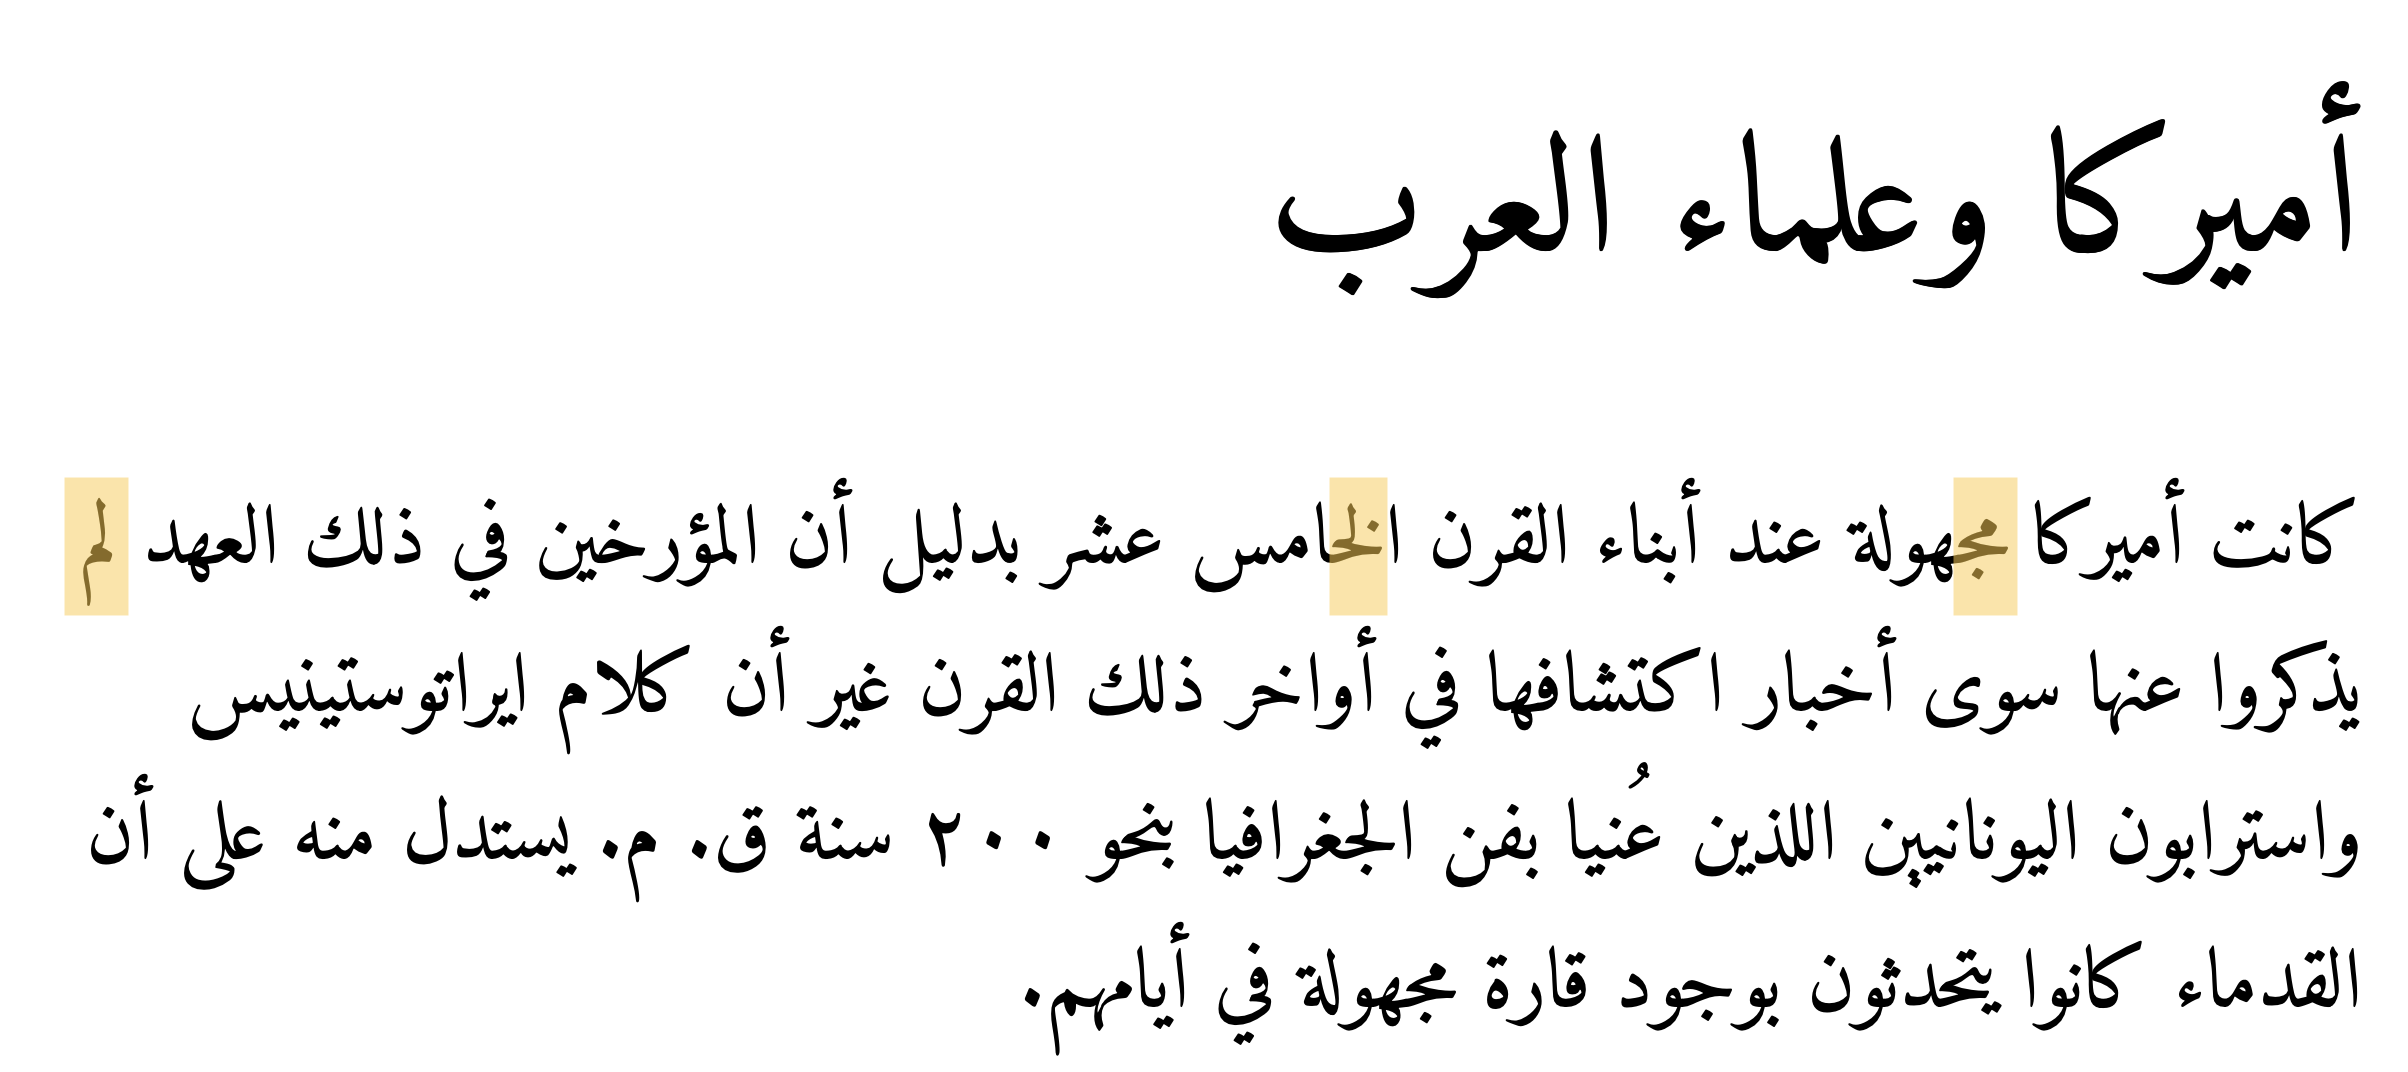 Beginning of Zakham (1907). Some ligatures are highlighted.